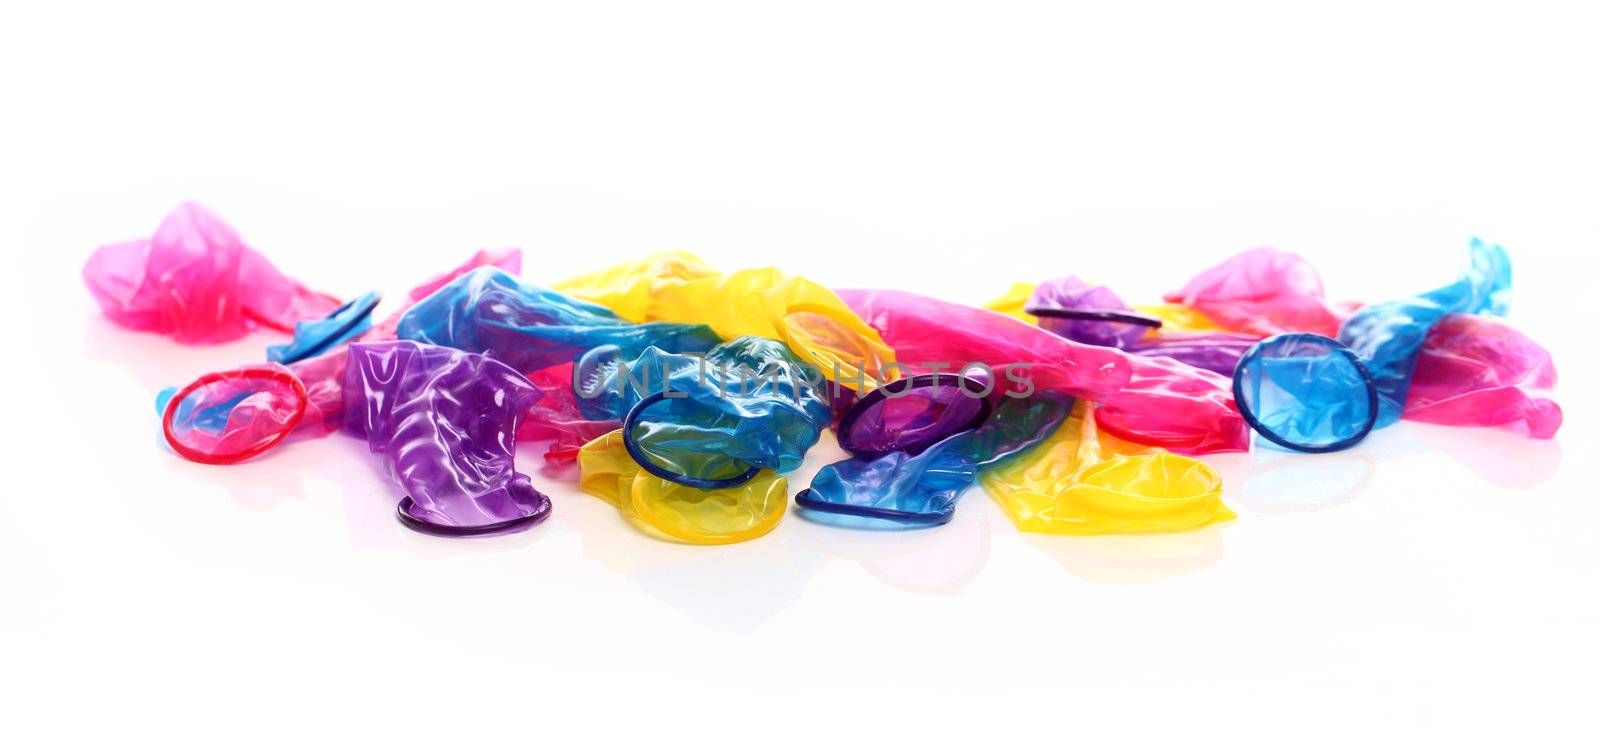 Image of used colorful condoms by rufatjumali